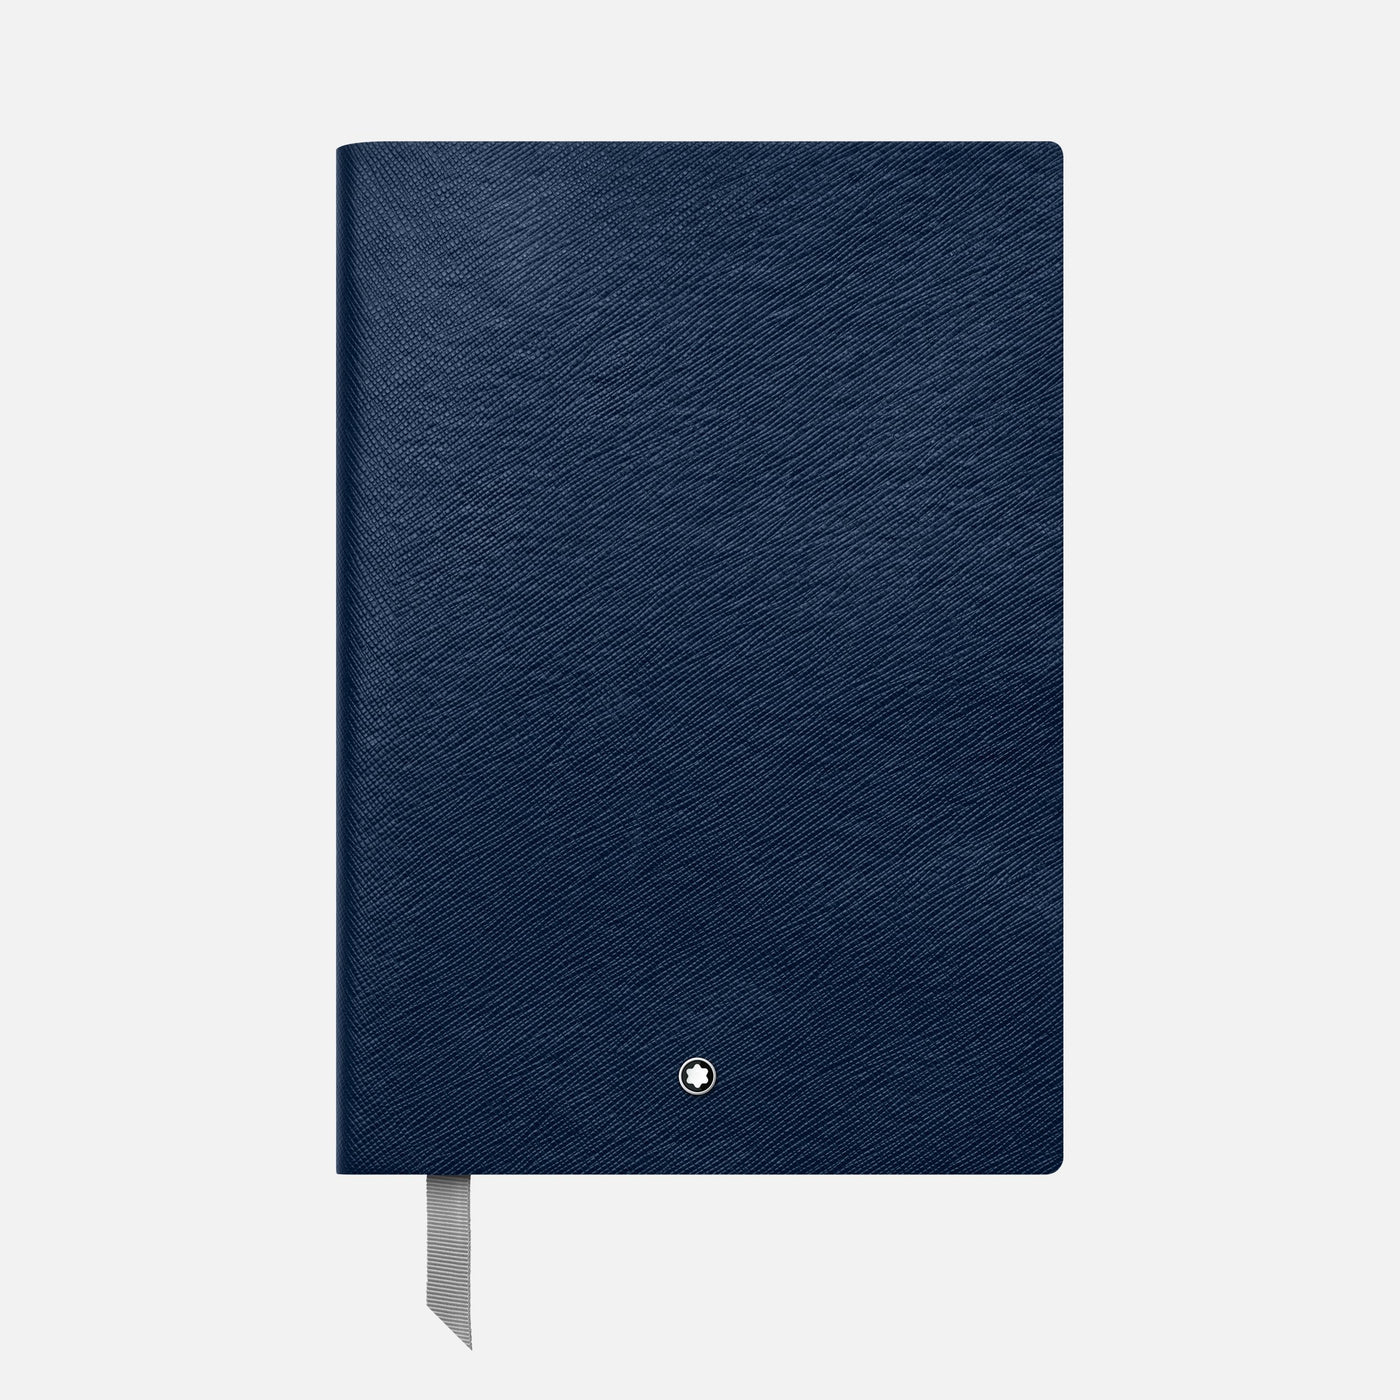 Montblanc Fine Stationery #146 Blank Notebook - Indigo